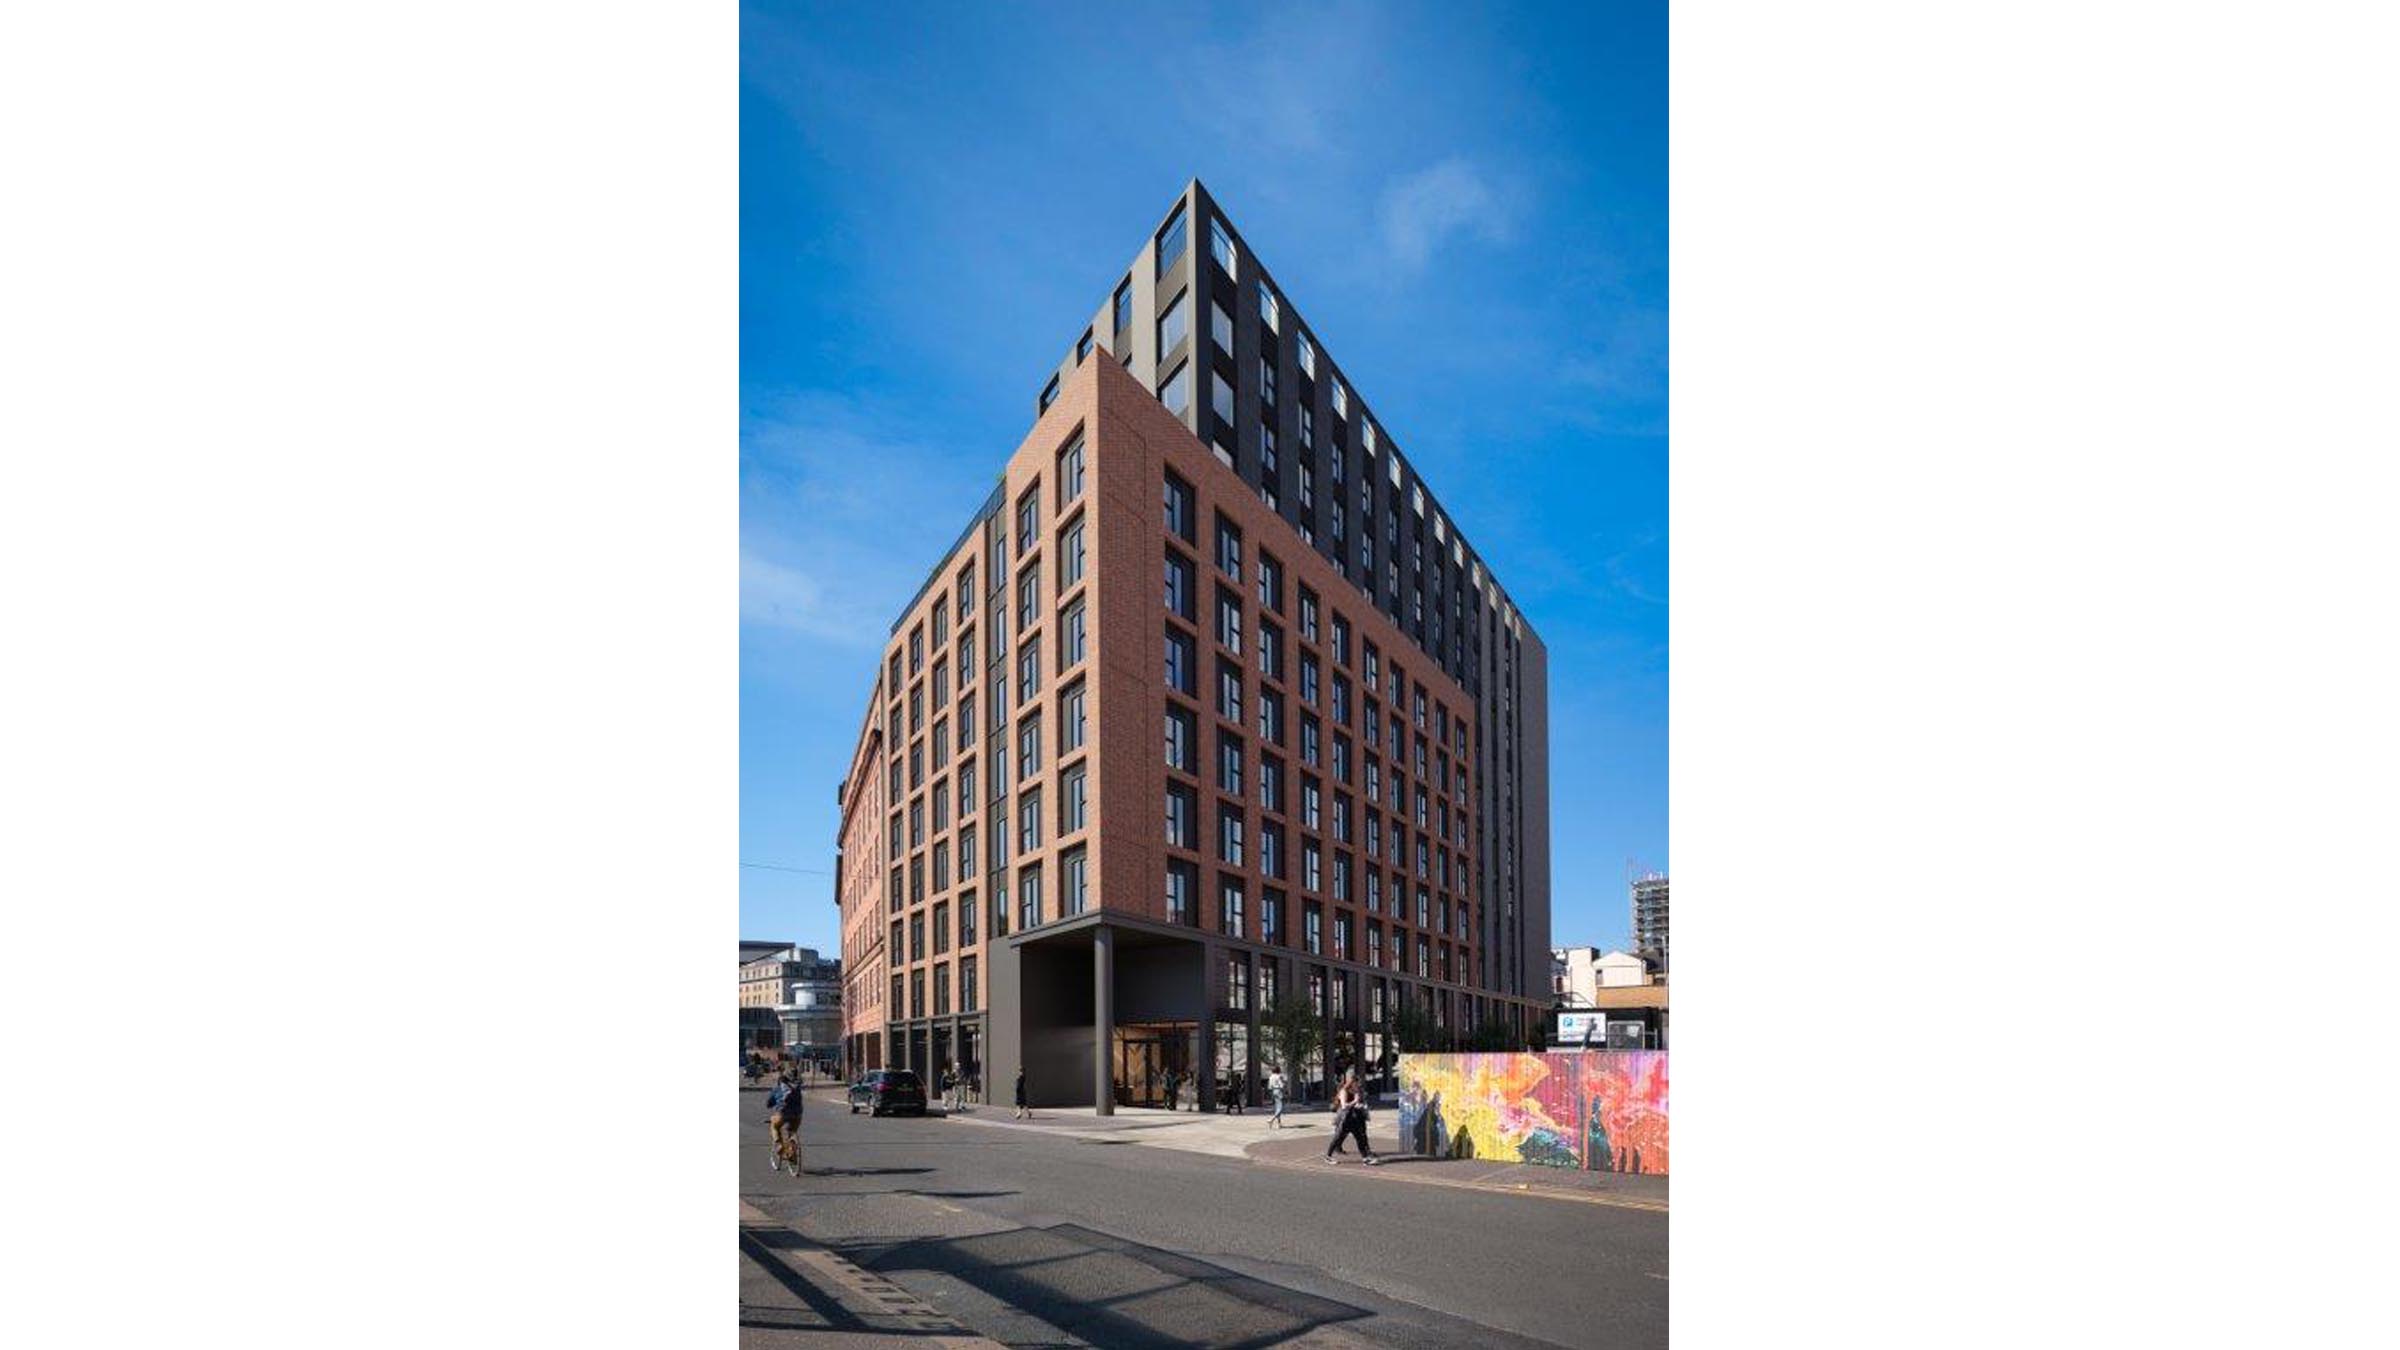 Student apartment block planned for Glasgow's Osborne Street